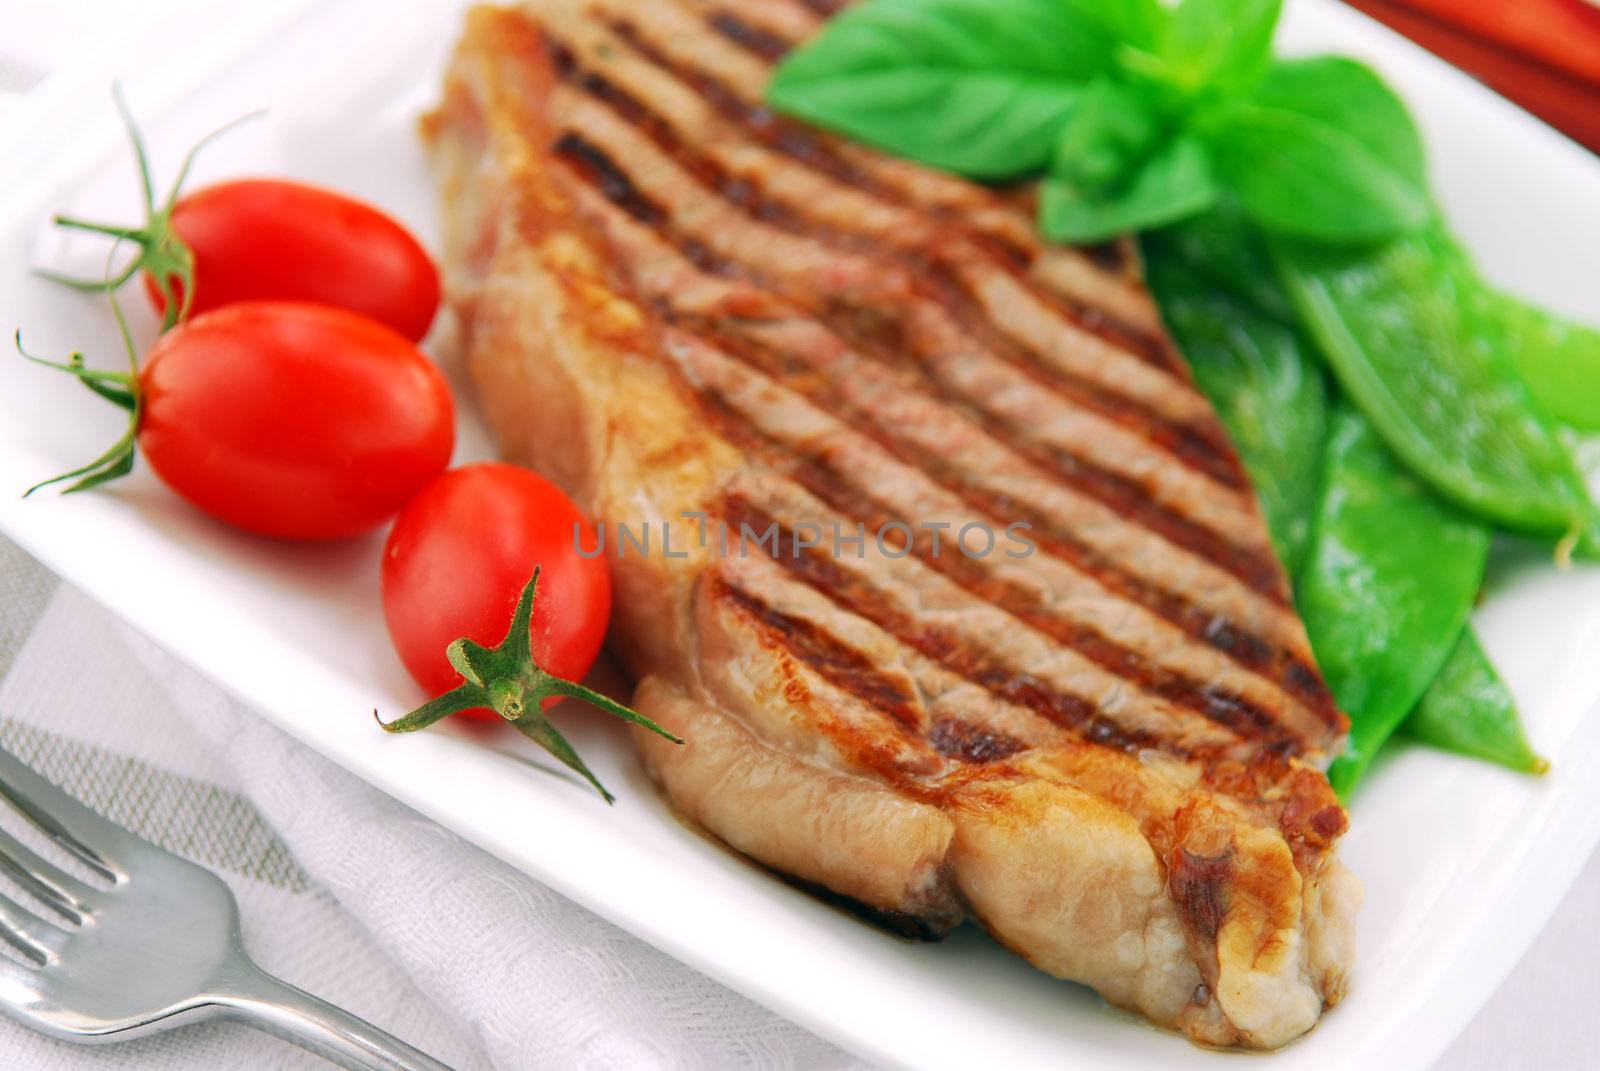 Grilled steak by elenathewise